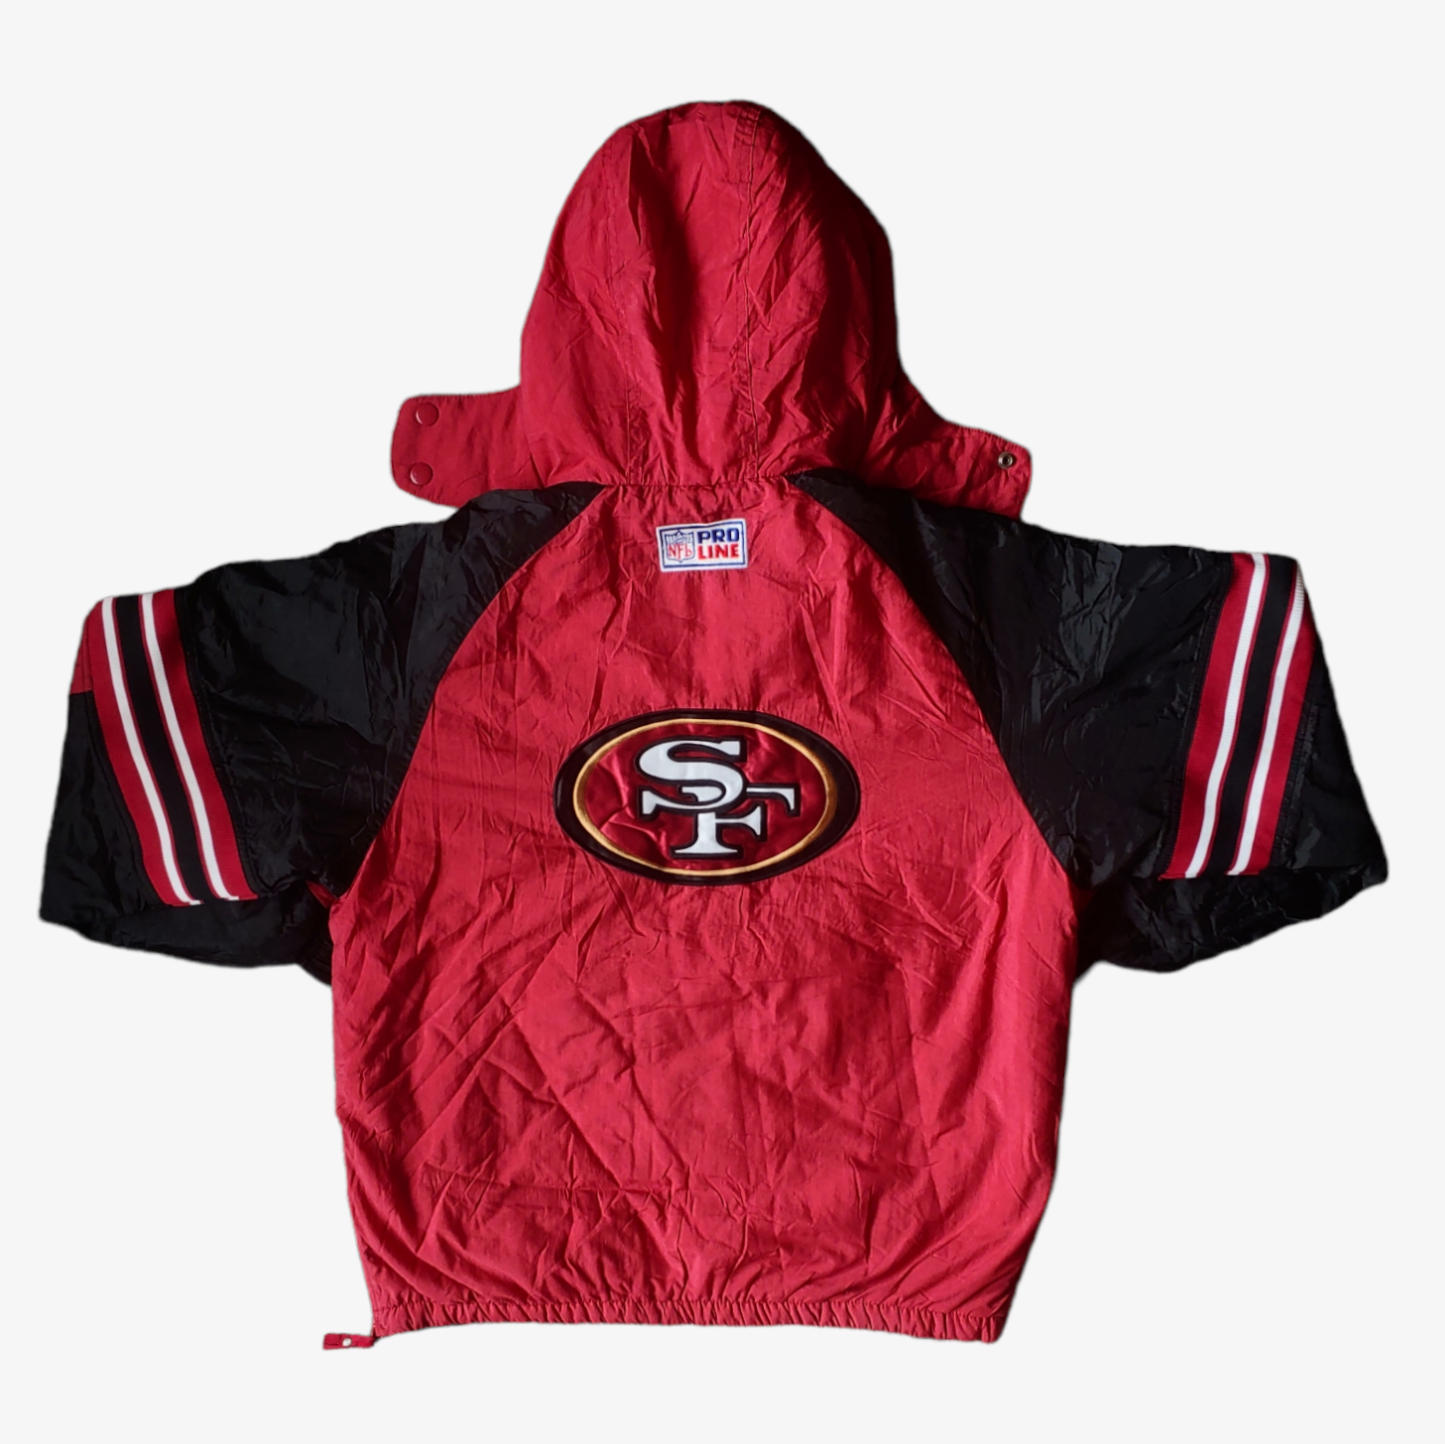 Vintage 90s Starter NFL Pro Line San Francisco 49ers Jacket With Back Spell Out Back - Casspios Dream